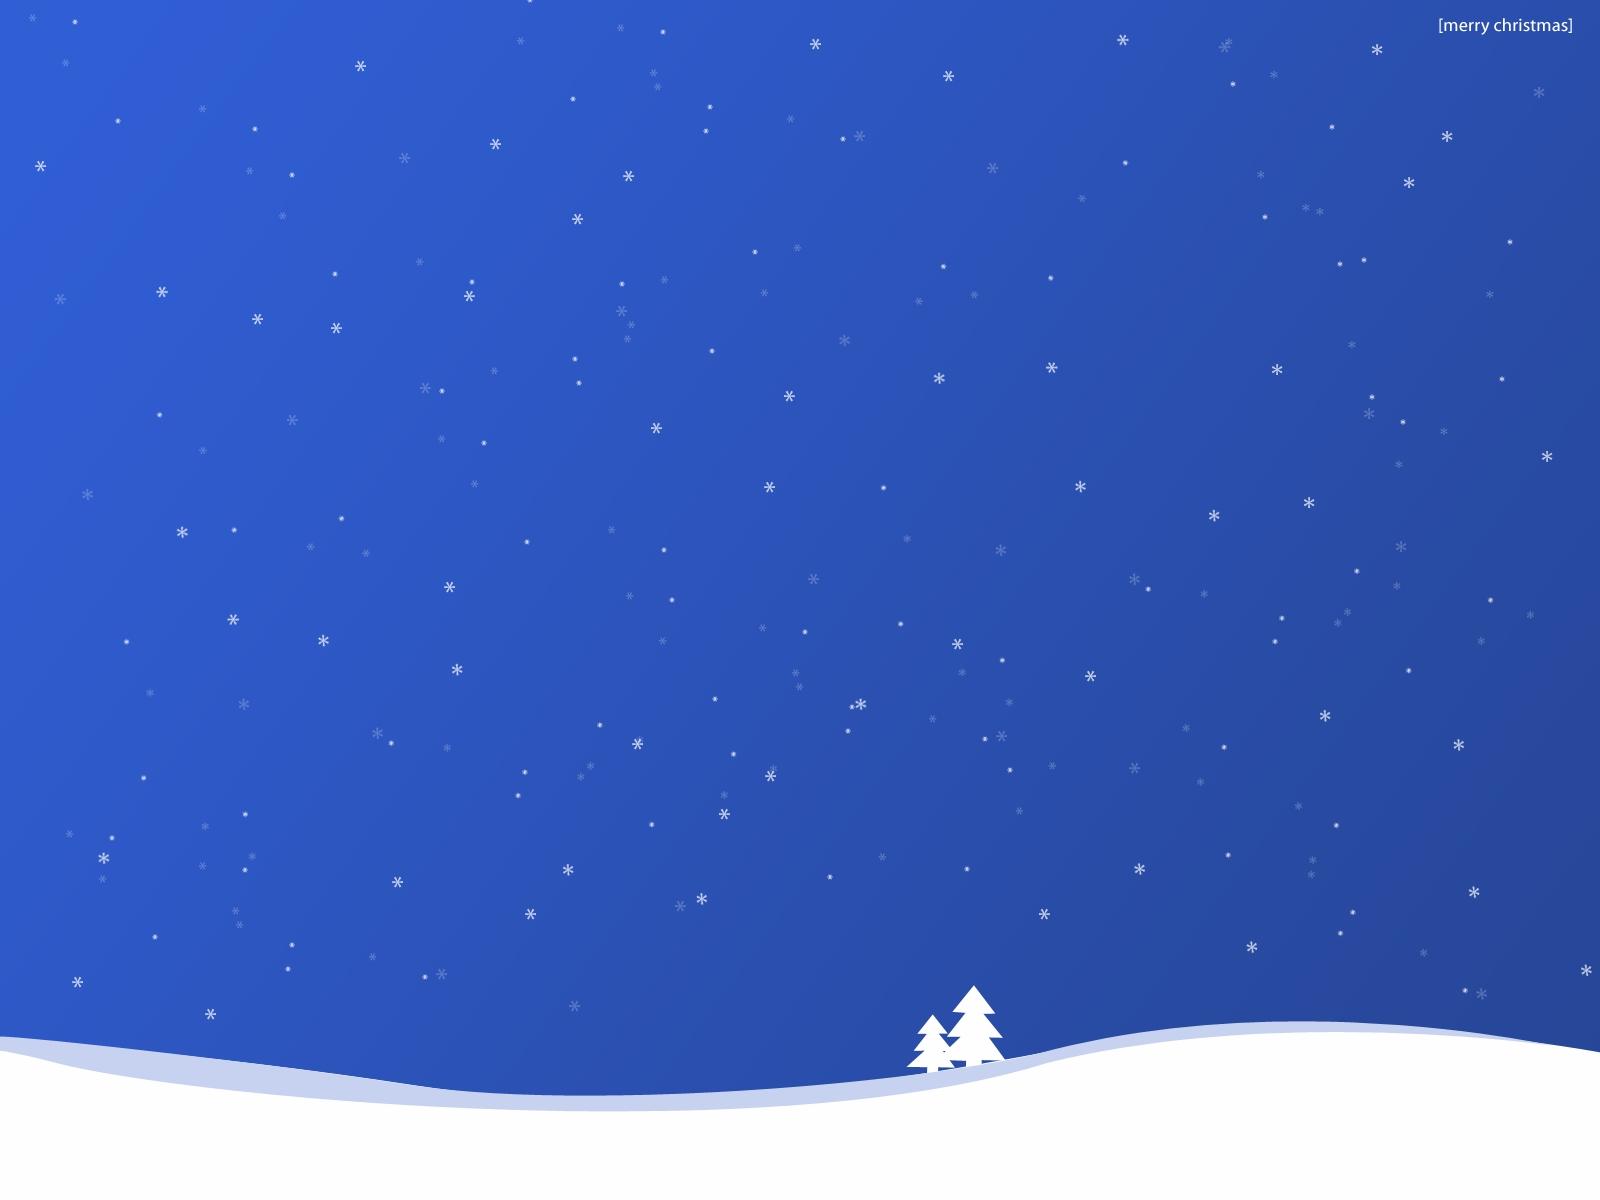 Free Snowy Christmas Desktop Wallpaper Art